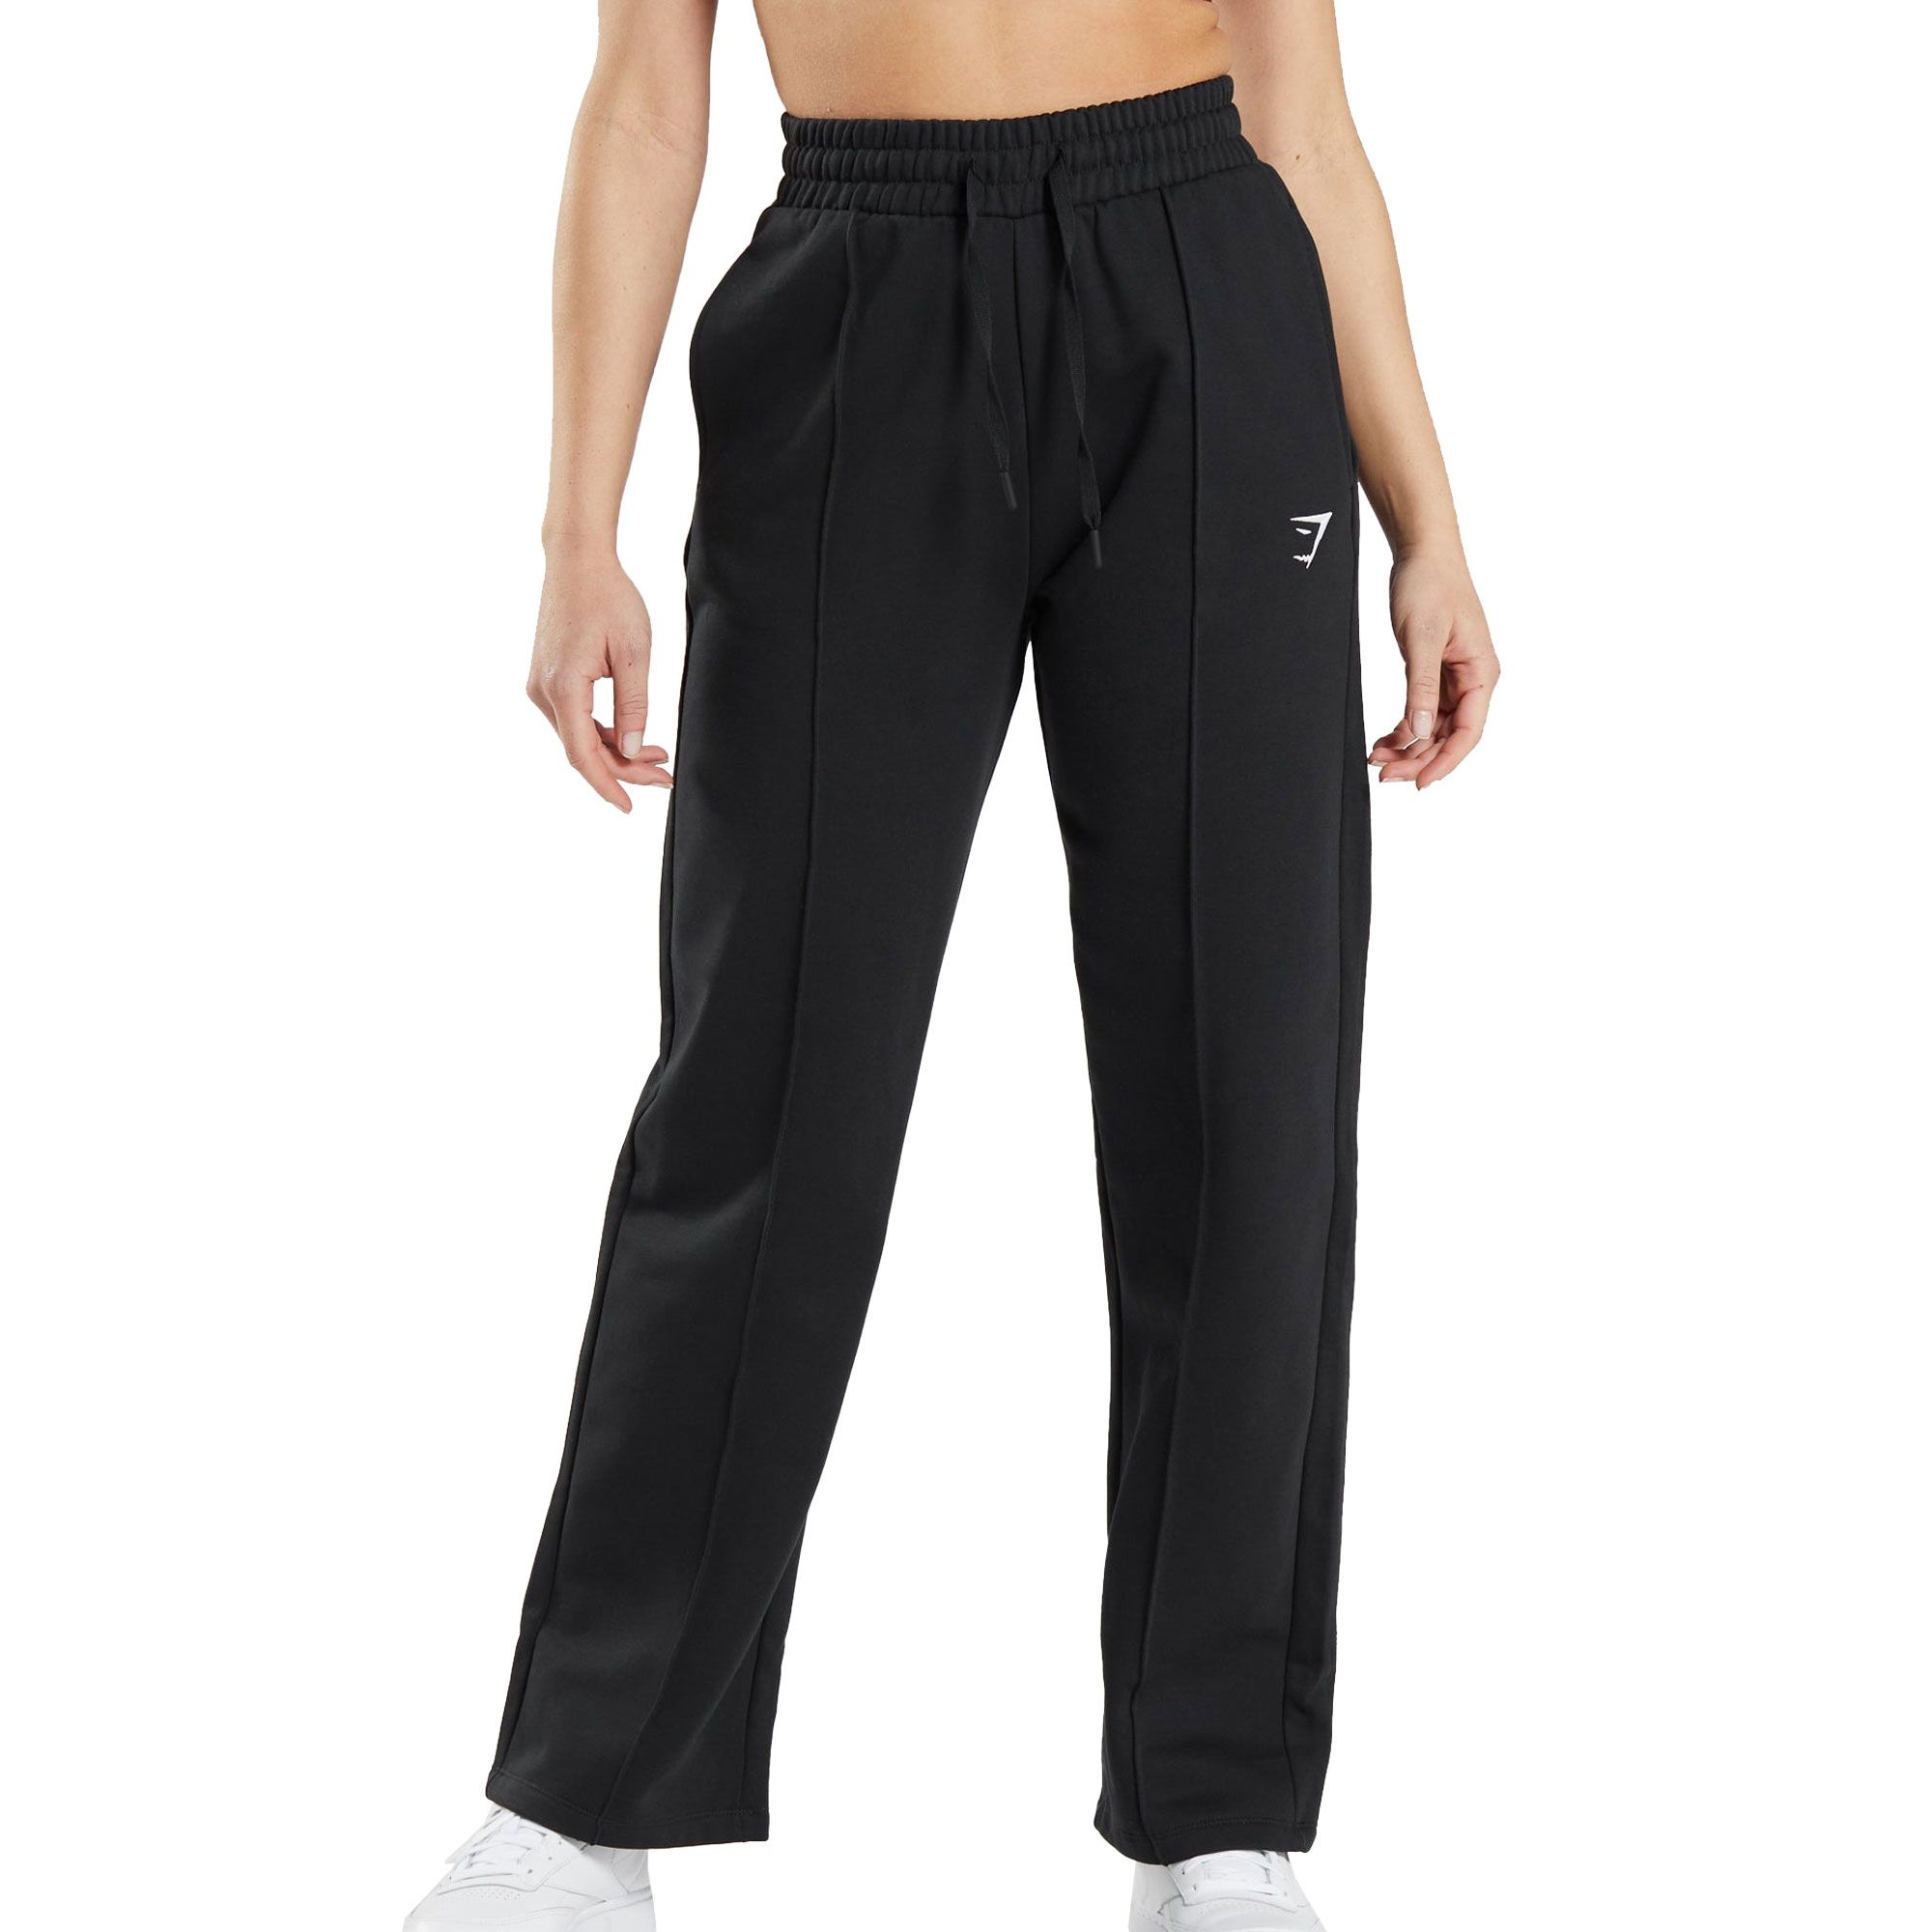 GymShark Men's Track Sweat Pants Adjustable Ankle Zip Black Pull On Size S  NEW | eBay